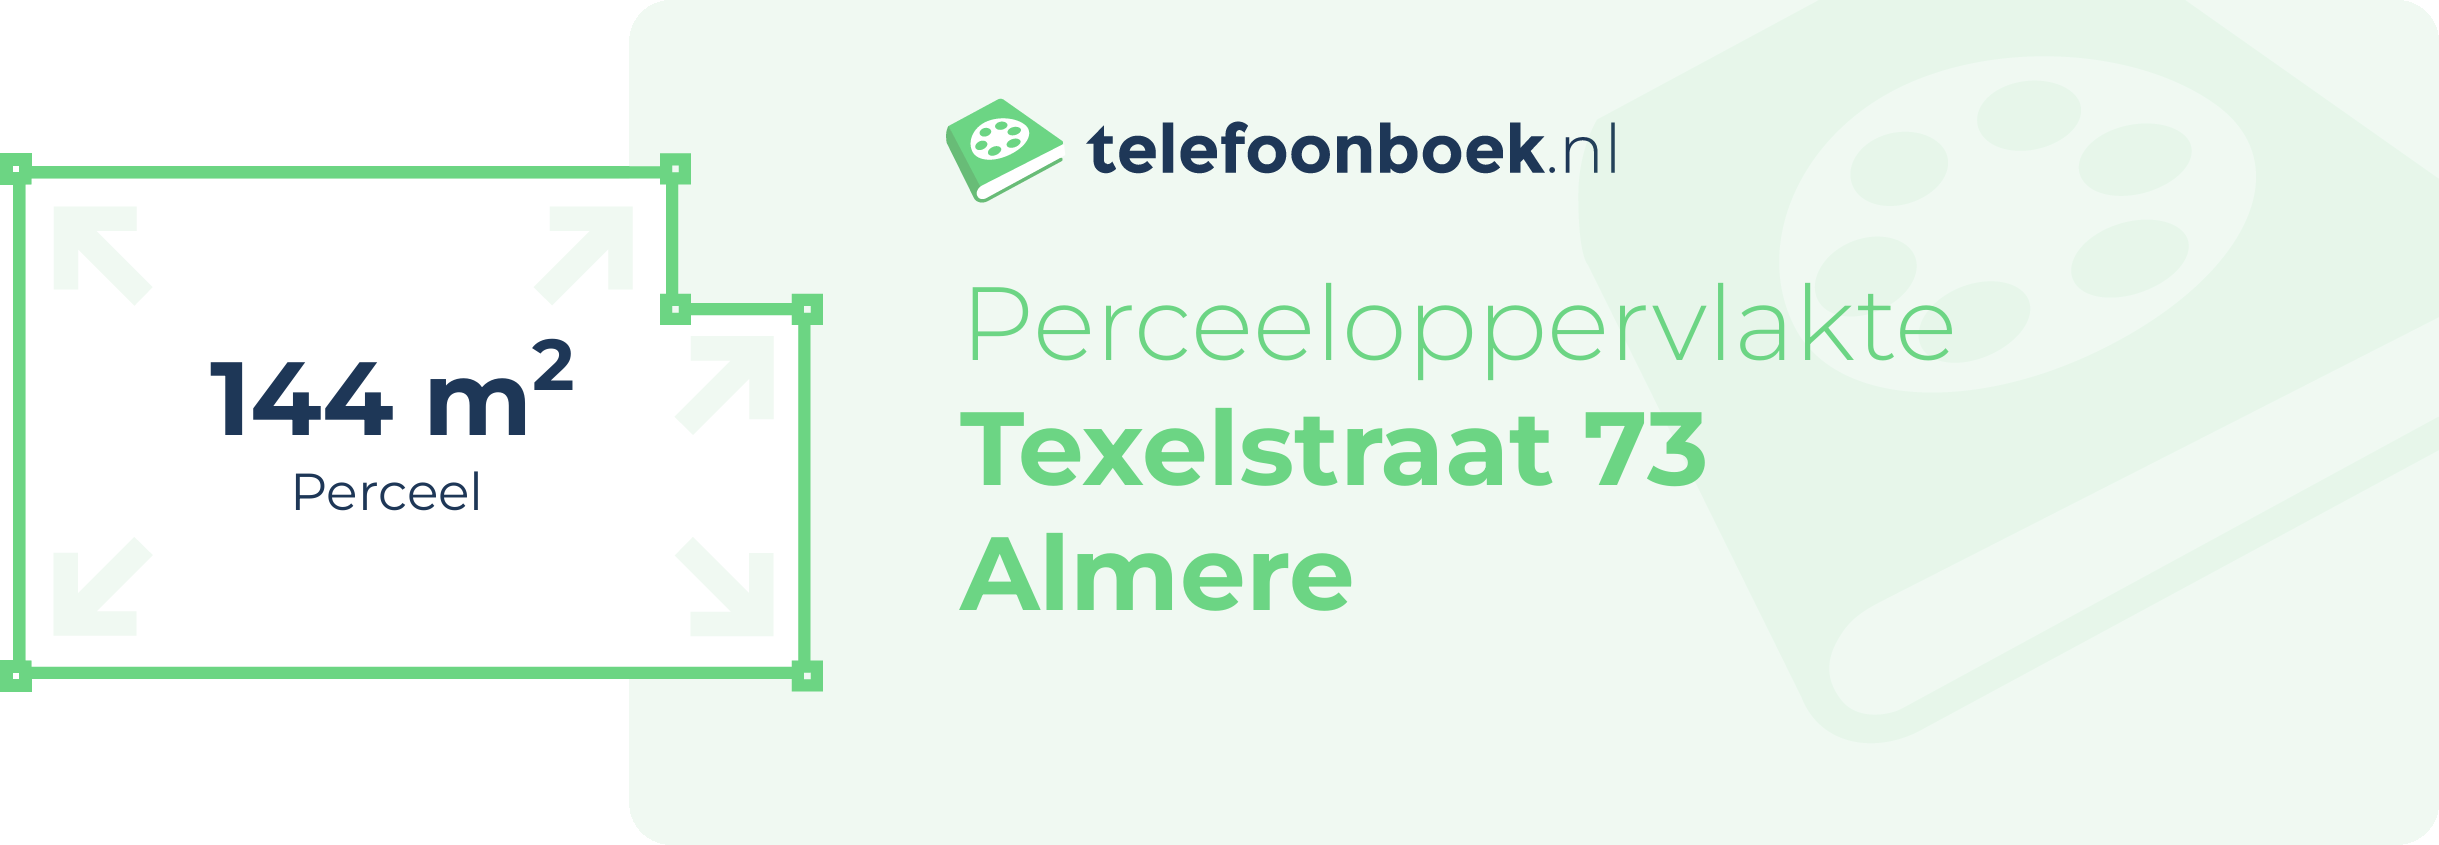 Perceeloppervlakte Texelstraat 73 Almere